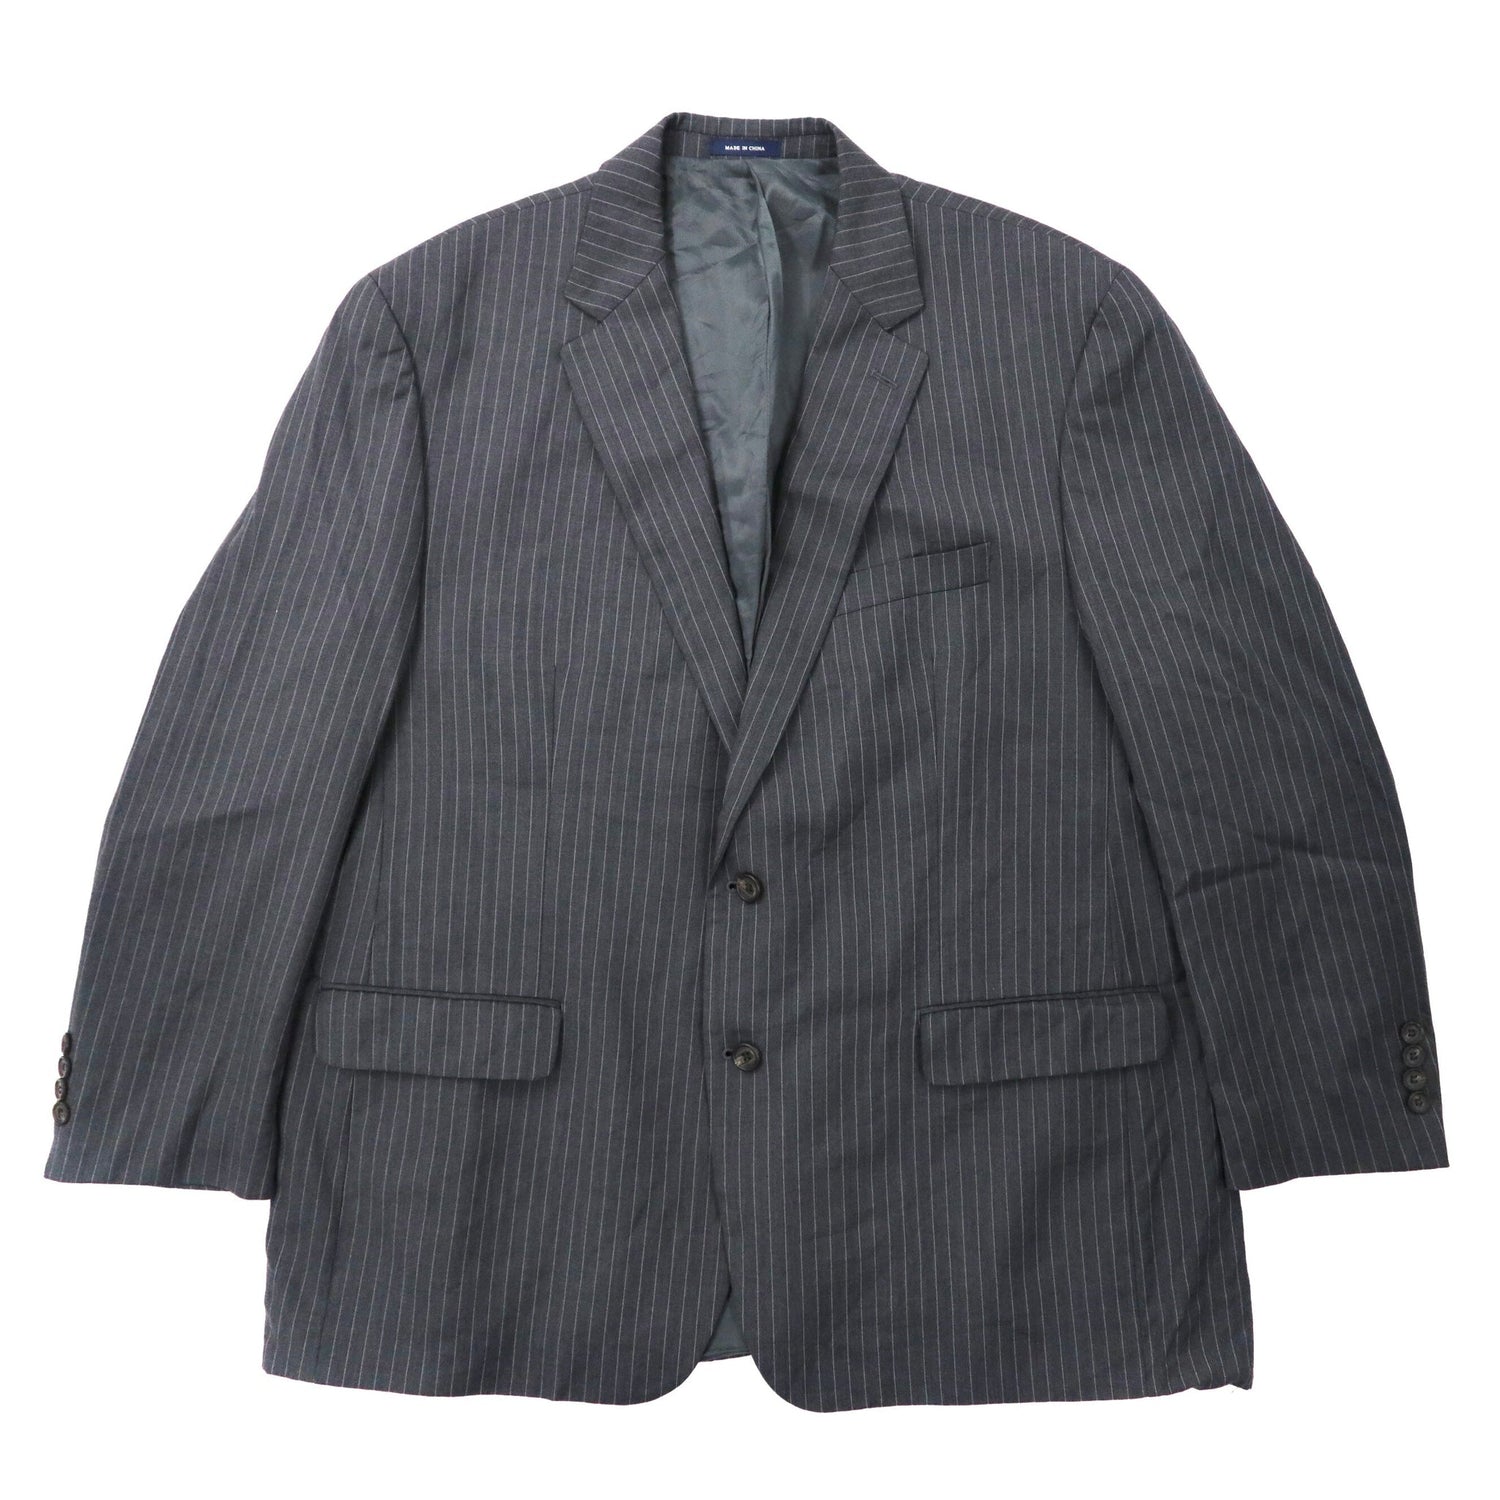 RALPH LAUREN 2B Tailored Jacket 48 Gray Striped Wool DILLARD's